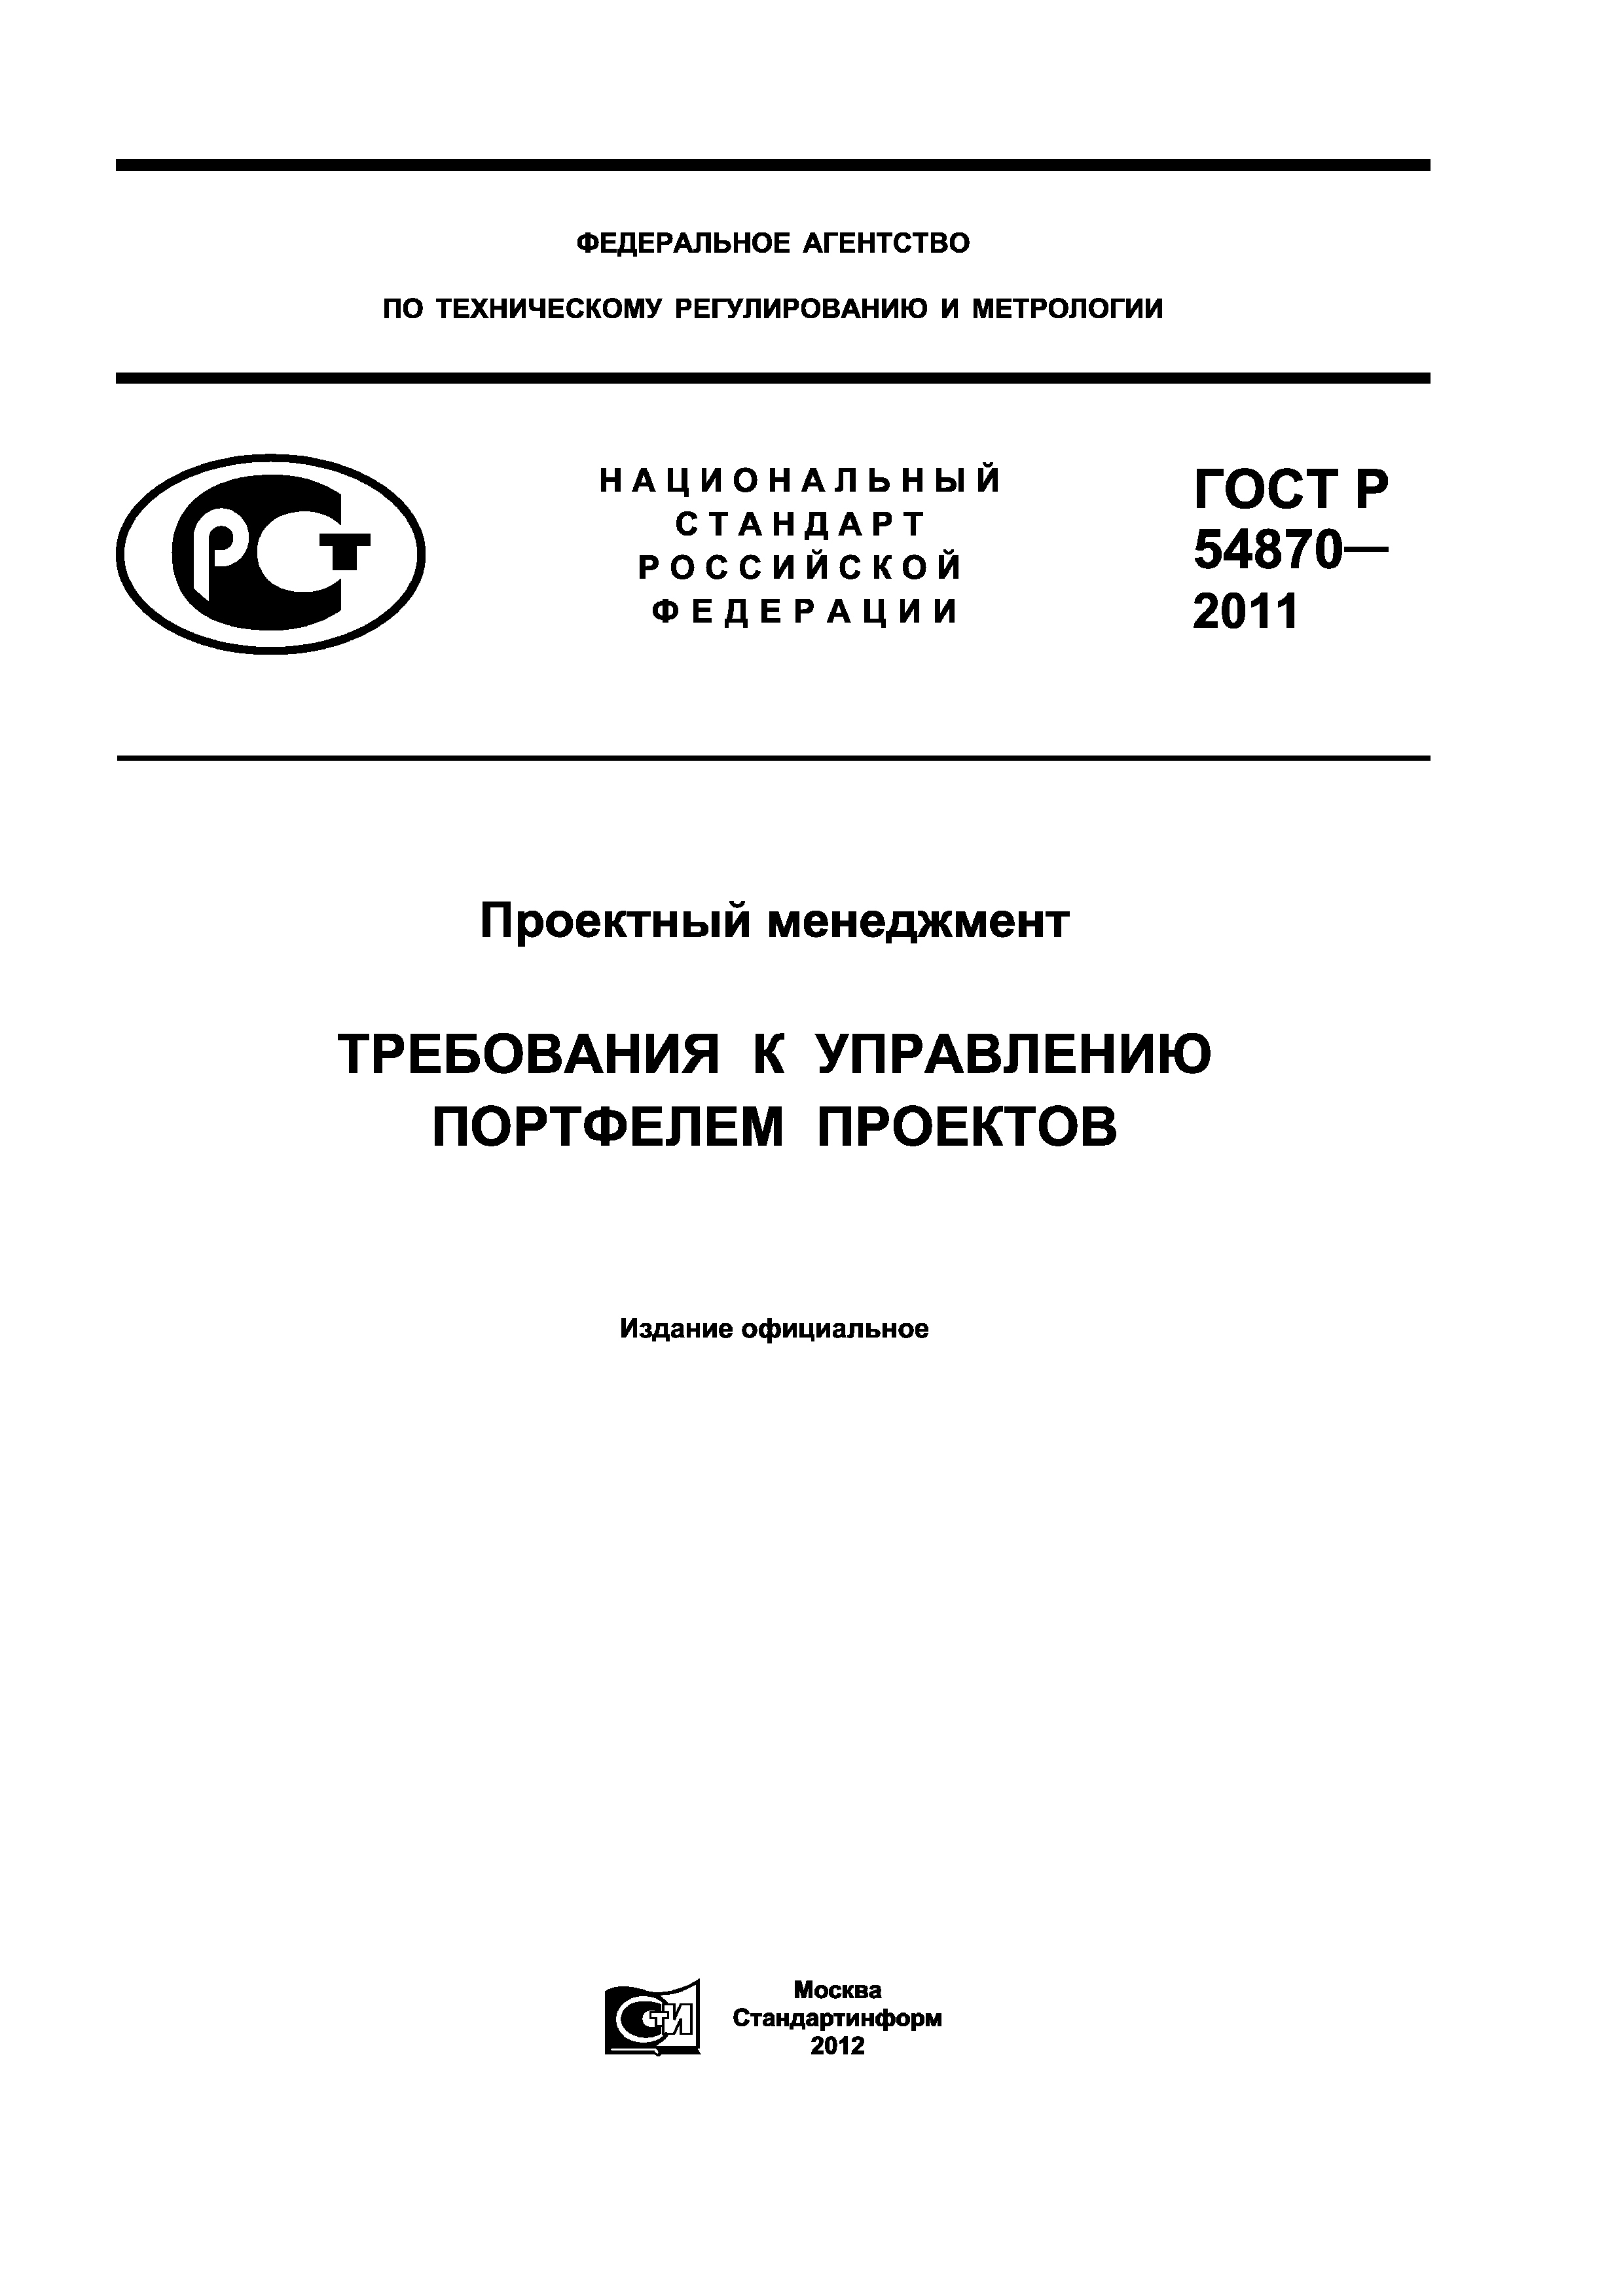 ГОСТ Р 54870-2011